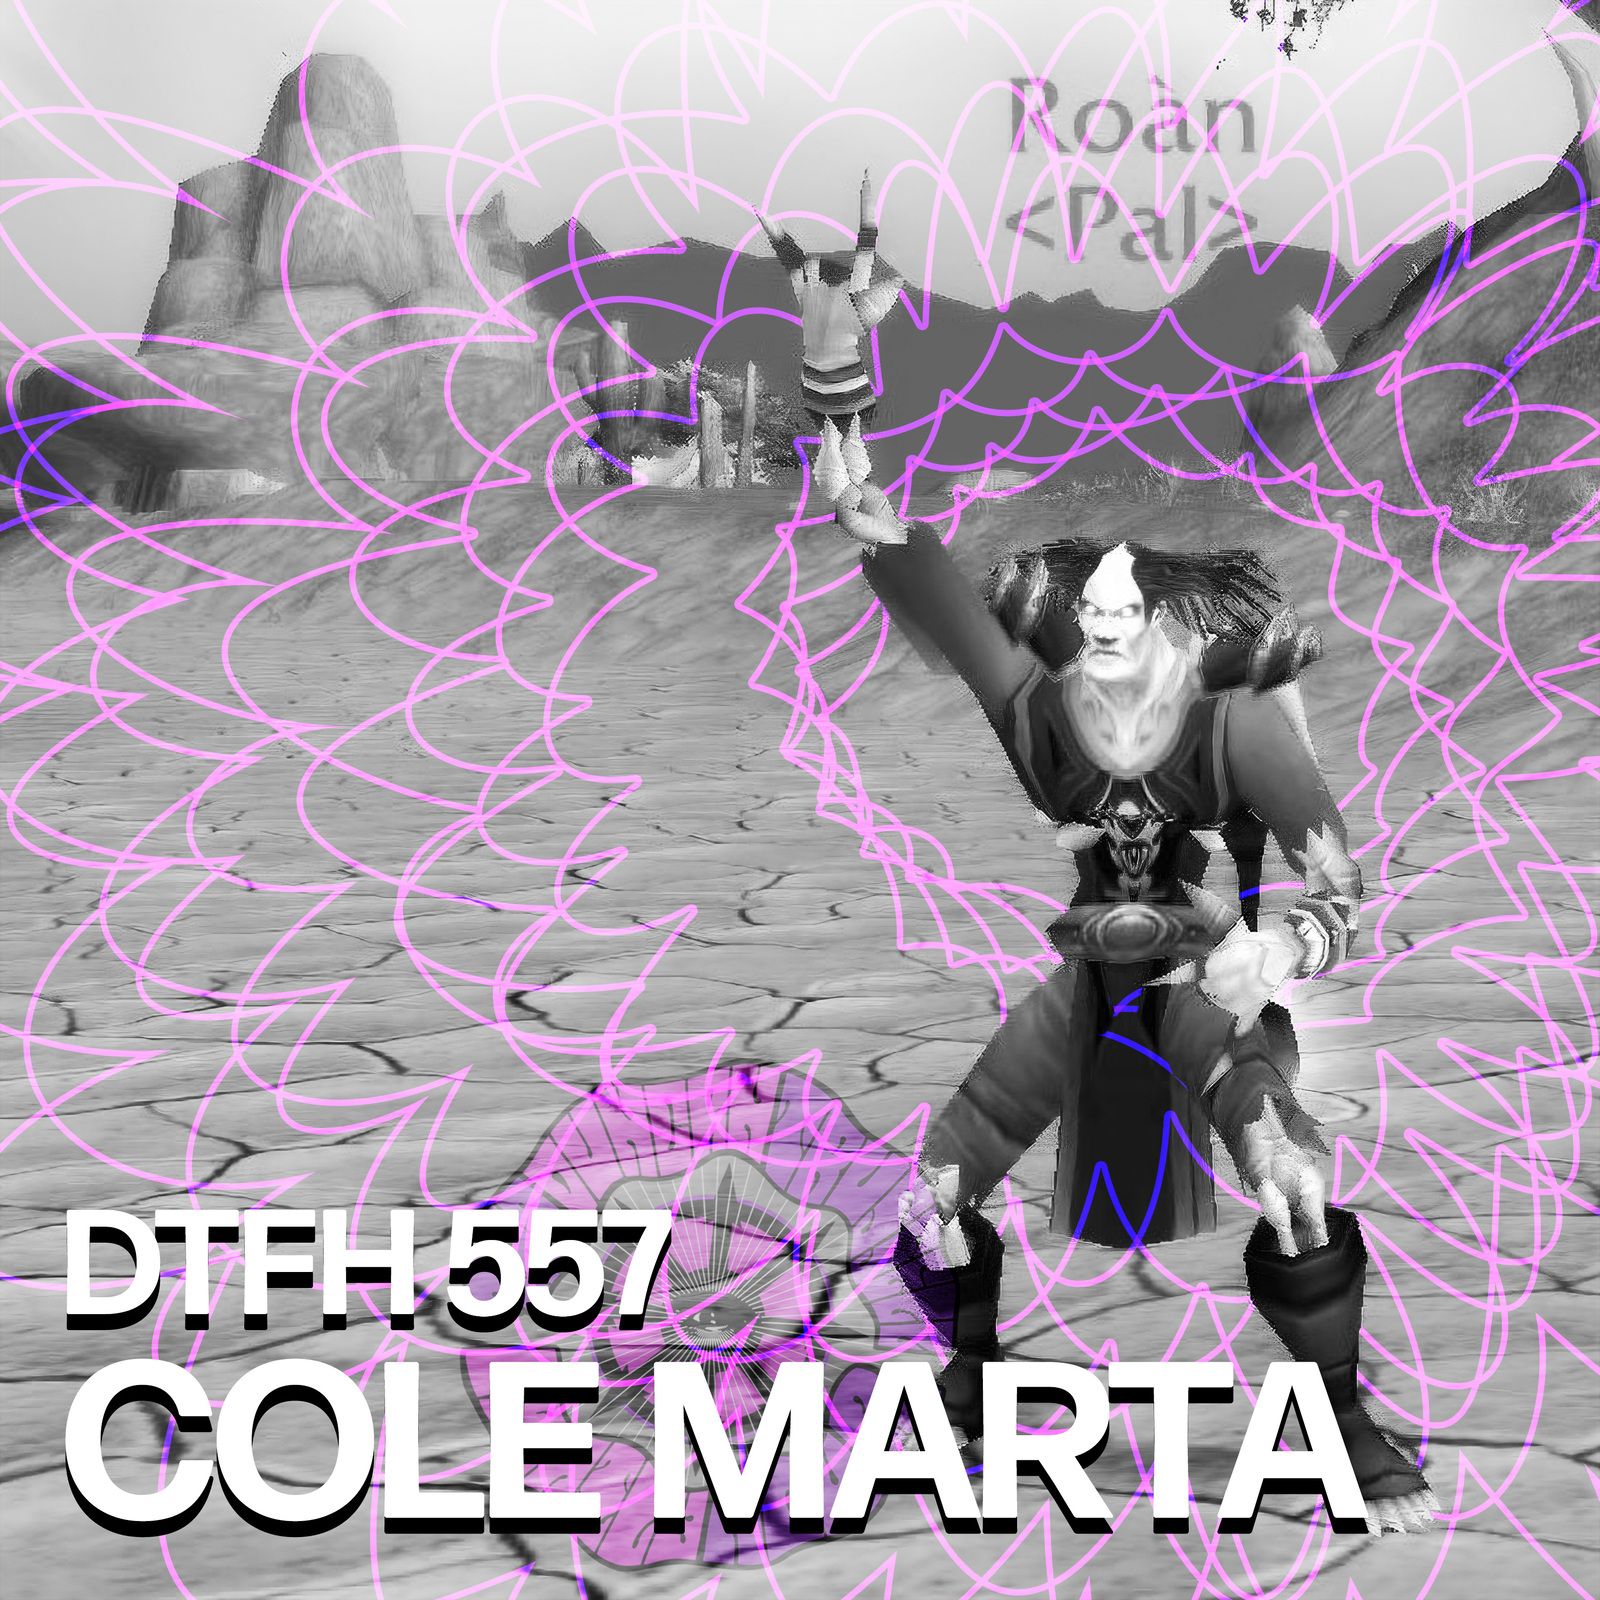 561: Cole Marta